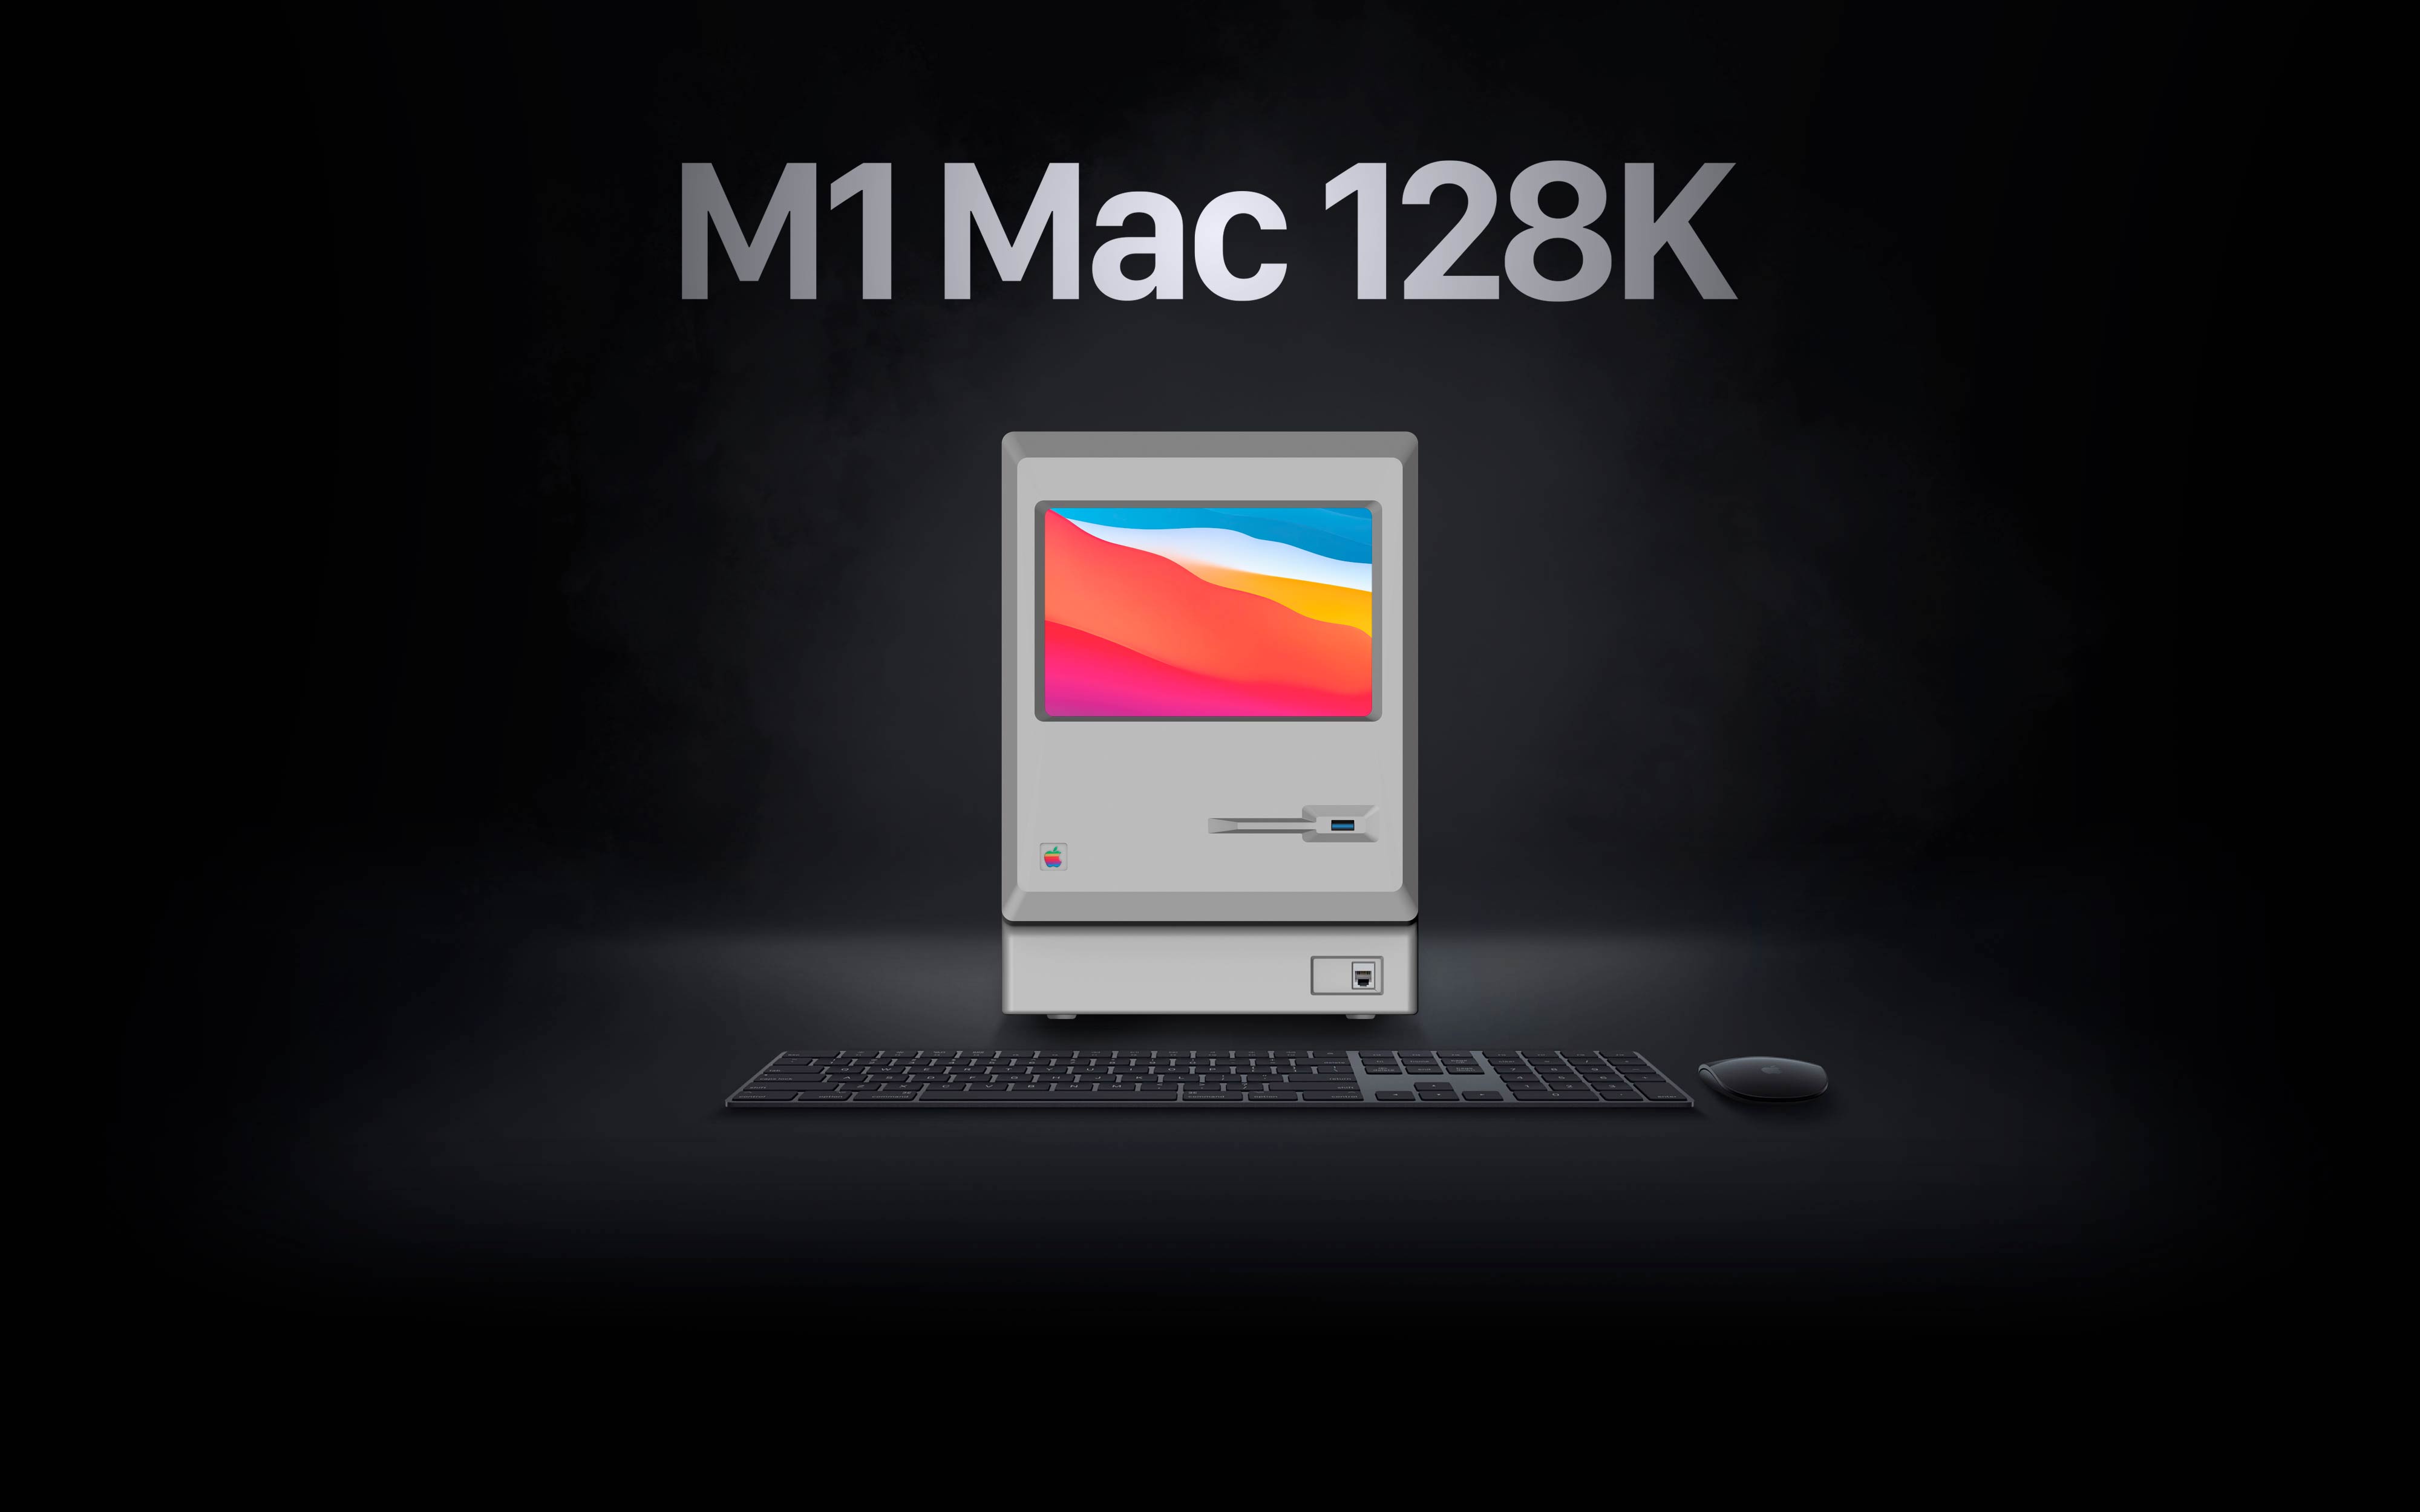 M1 Mac 128K front view